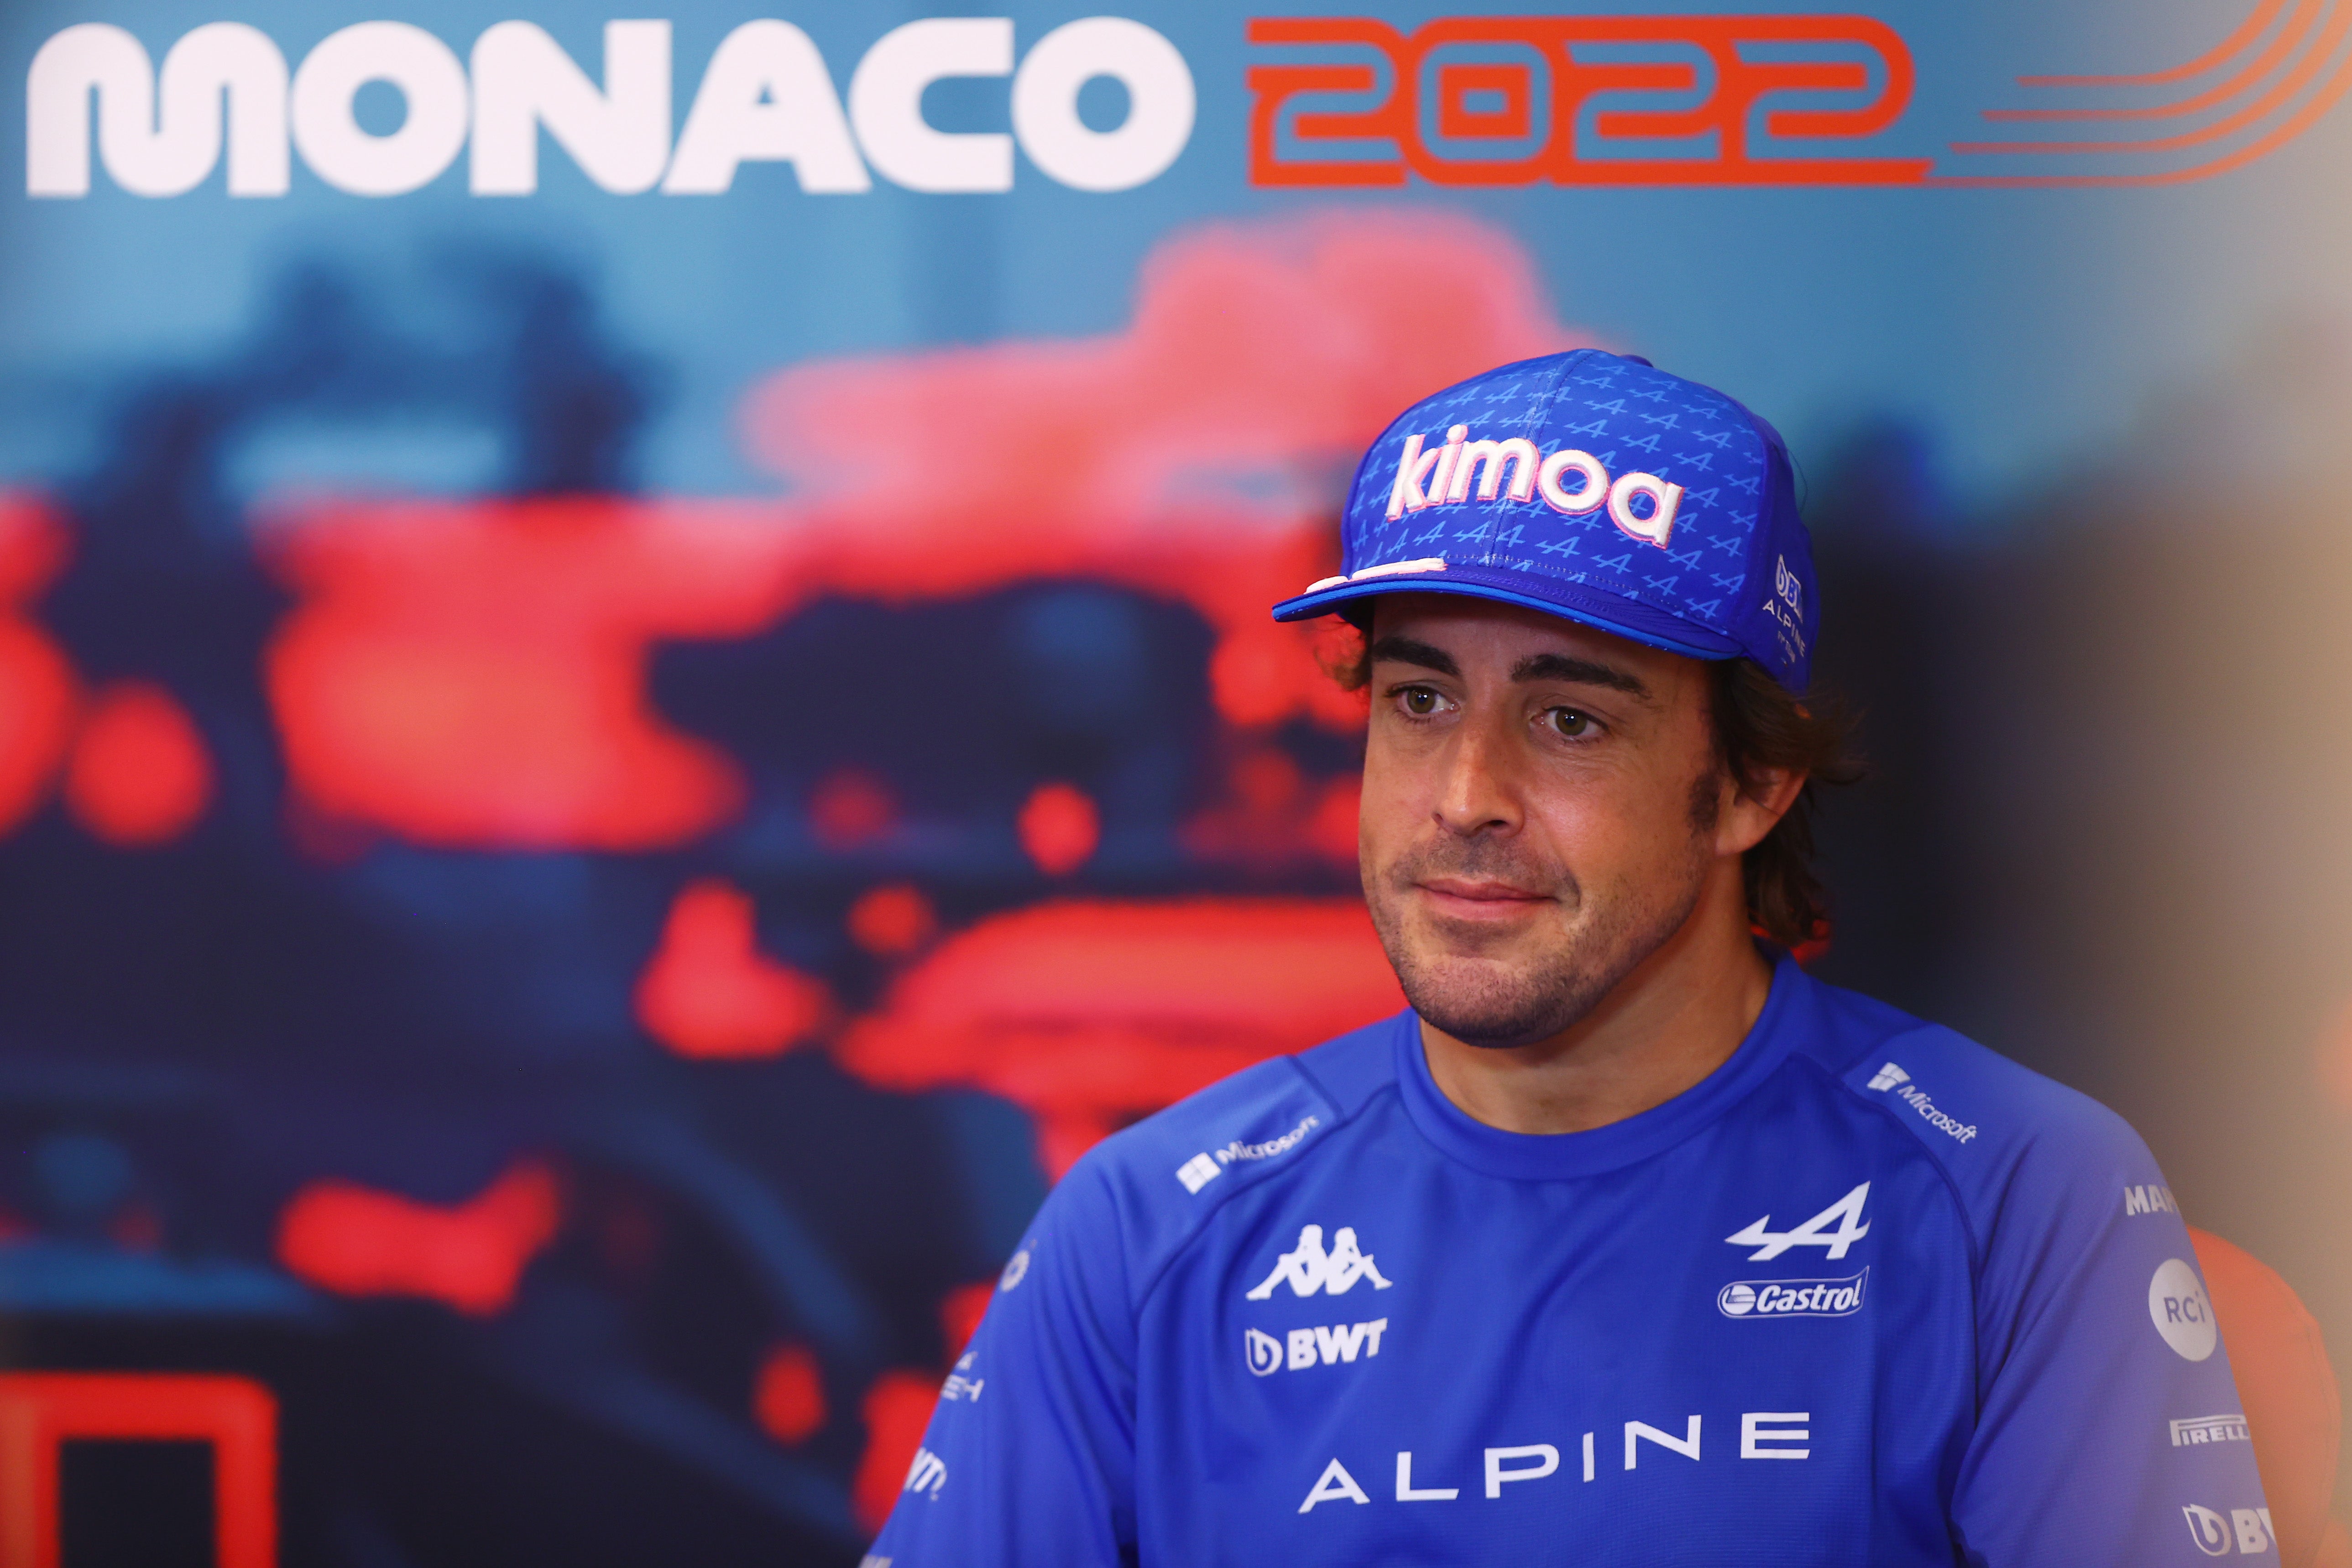 Fernando Alonso finished seventh in Monaco